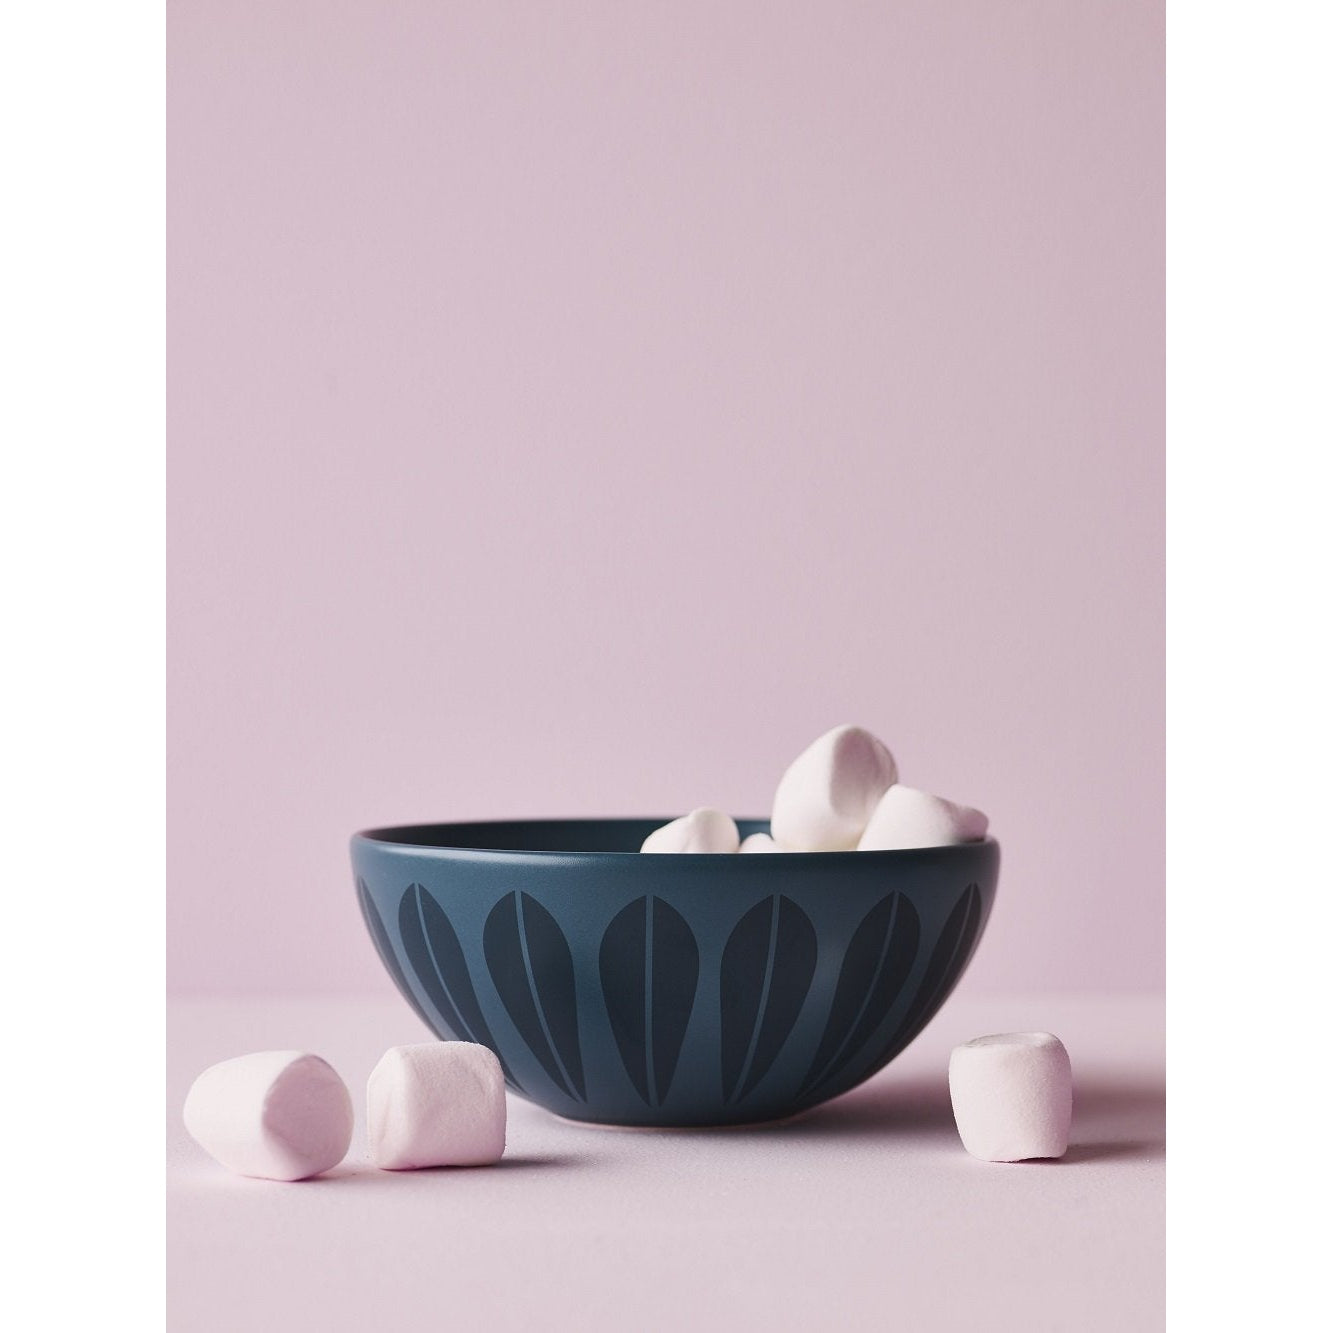 Lucie Kaas Arne Clausen Collection Sugar Bowl, Grey